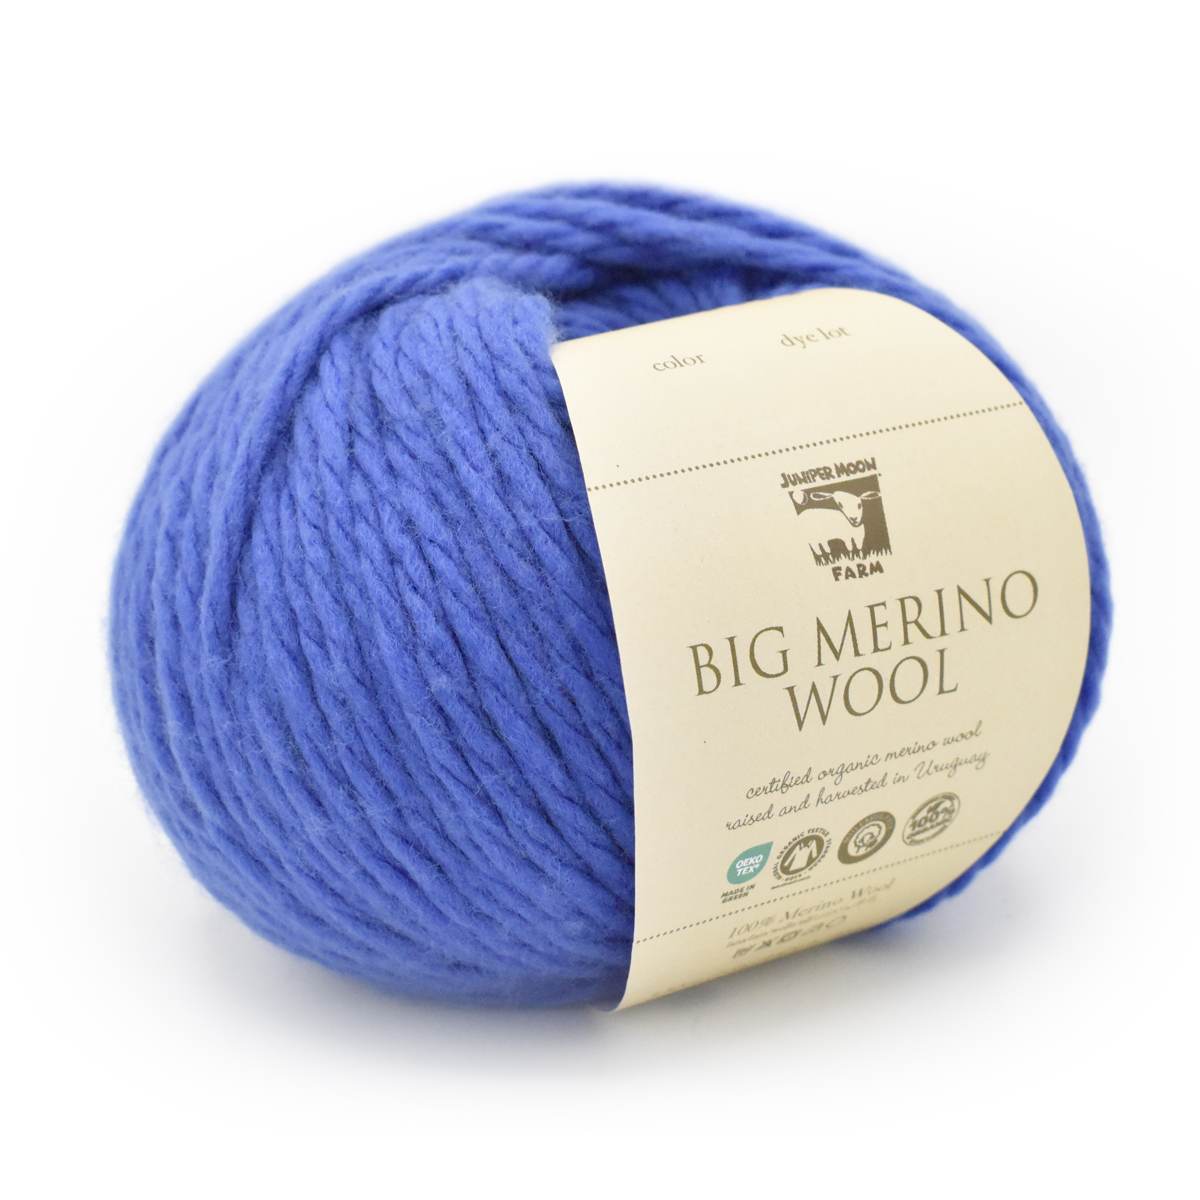 a skein of Big Merino Wool